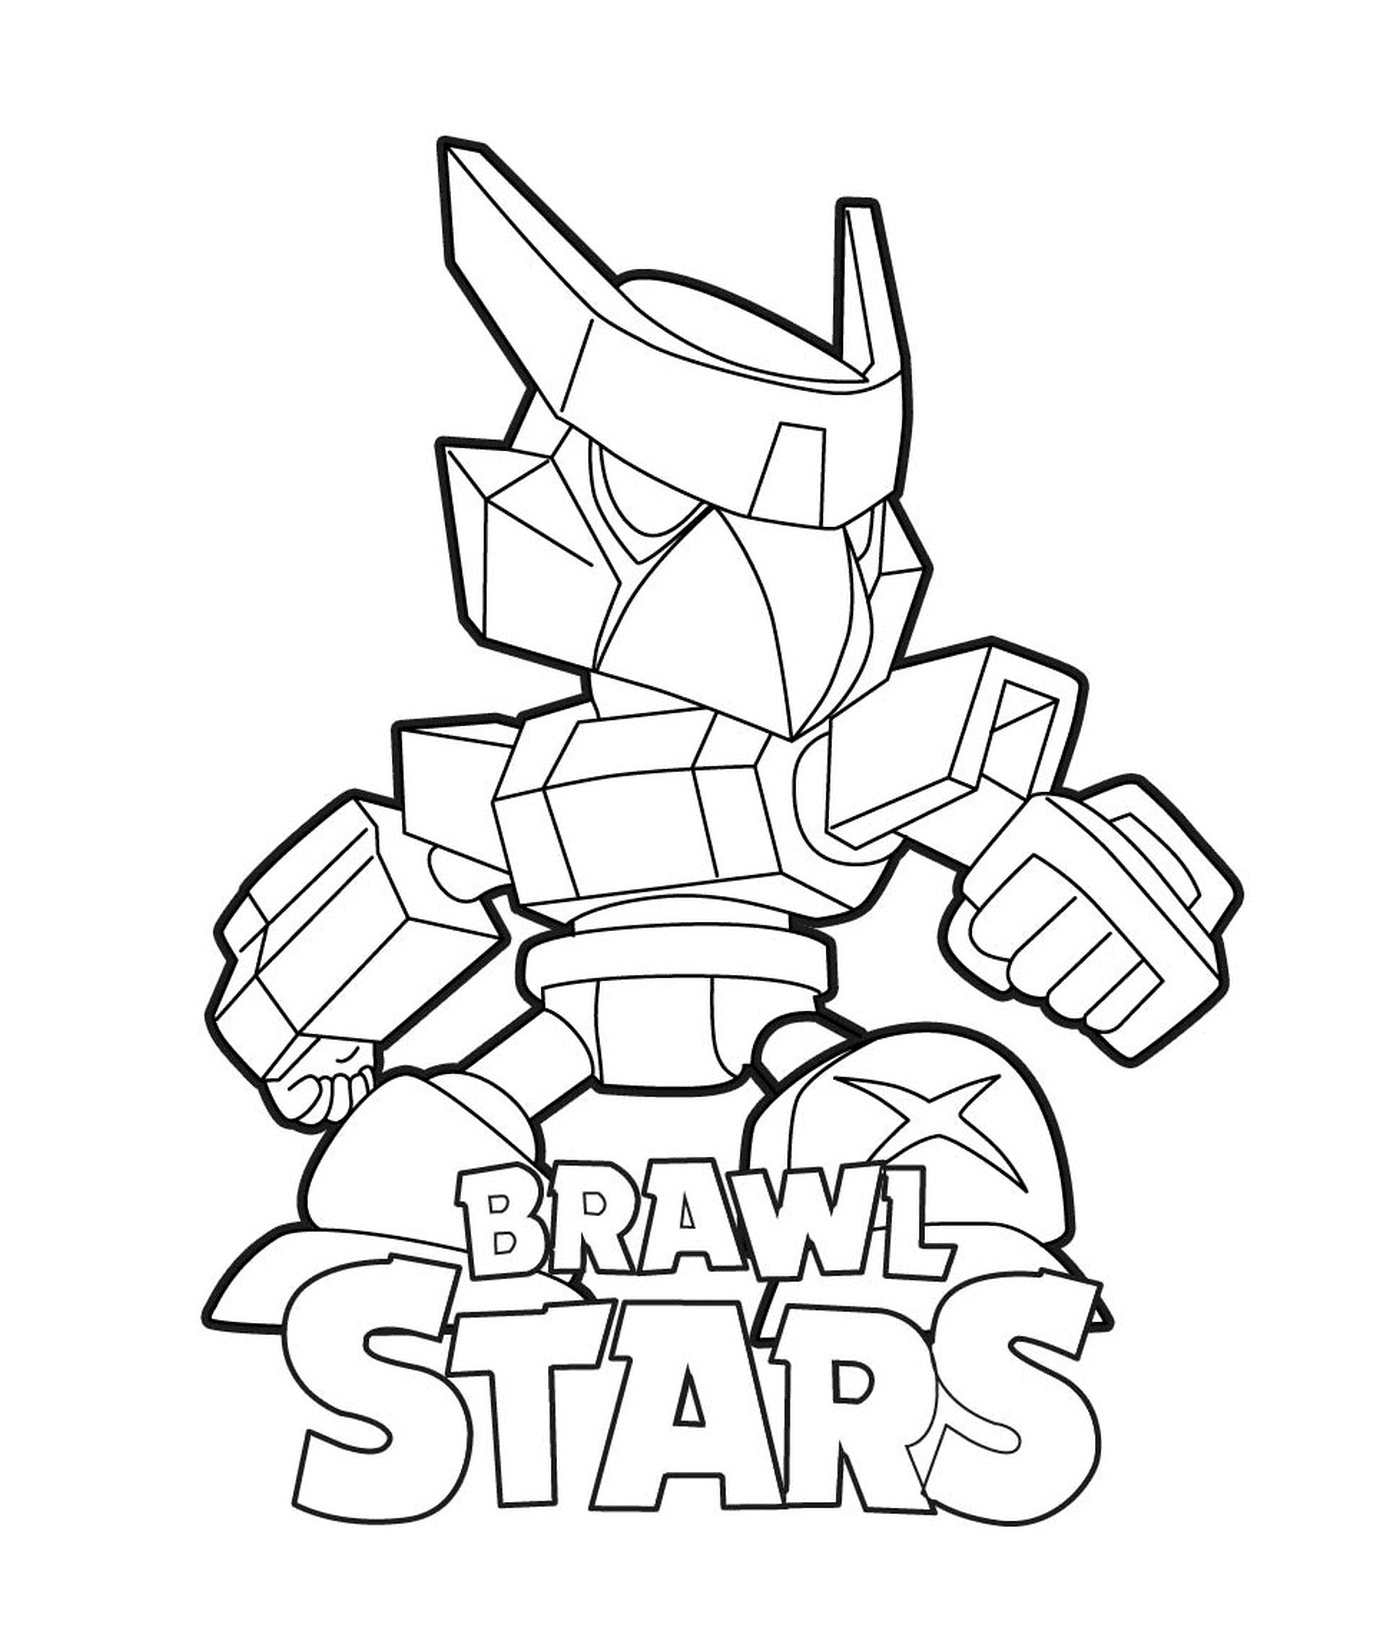  A Brawl Stars character named Mecha Crow 